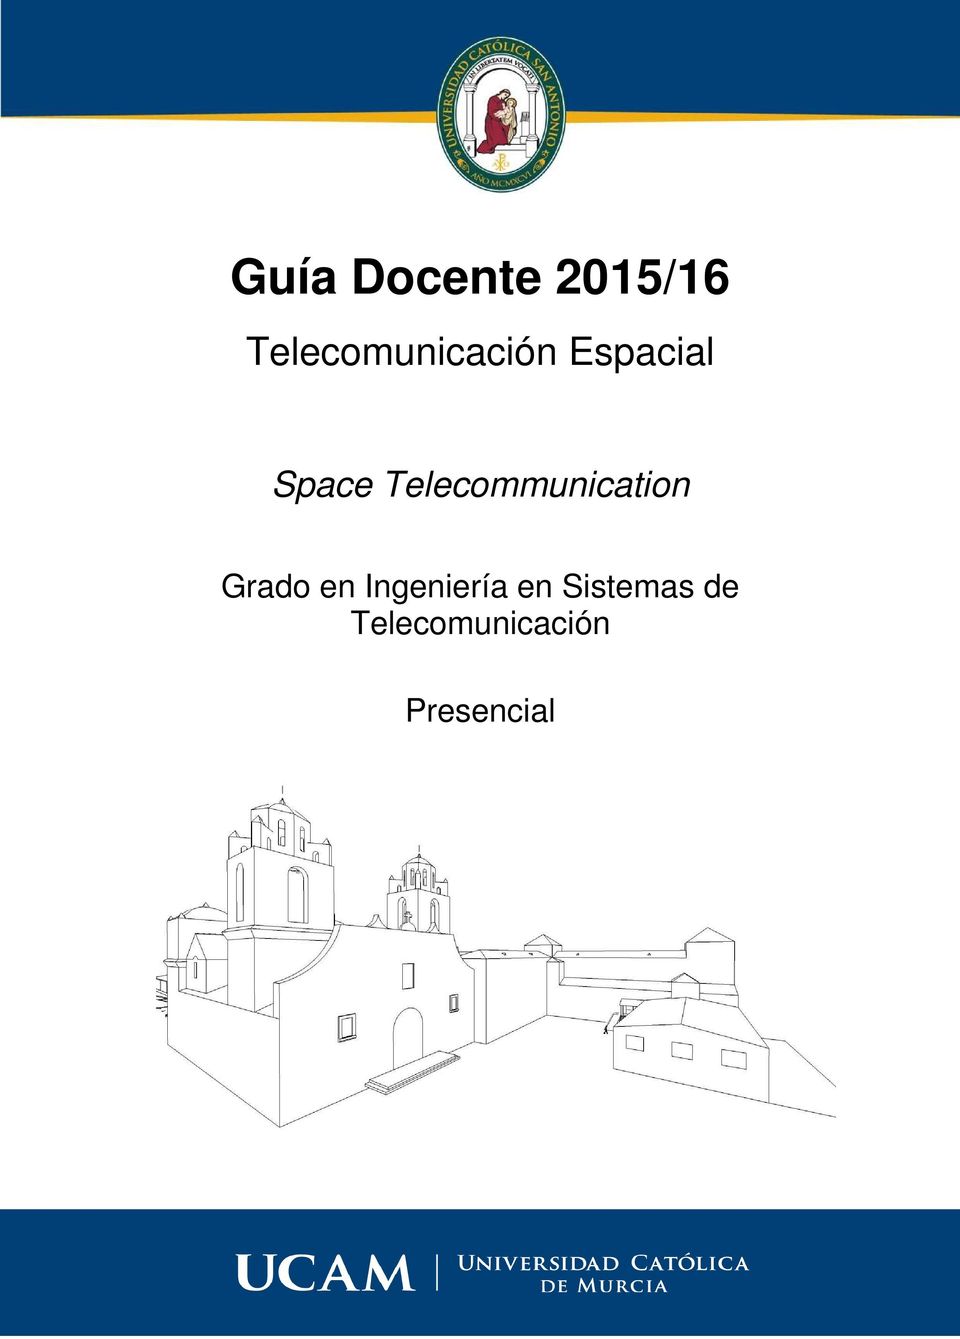 Telecomunicación Presencial 04/11/2015 12:40 Universidad